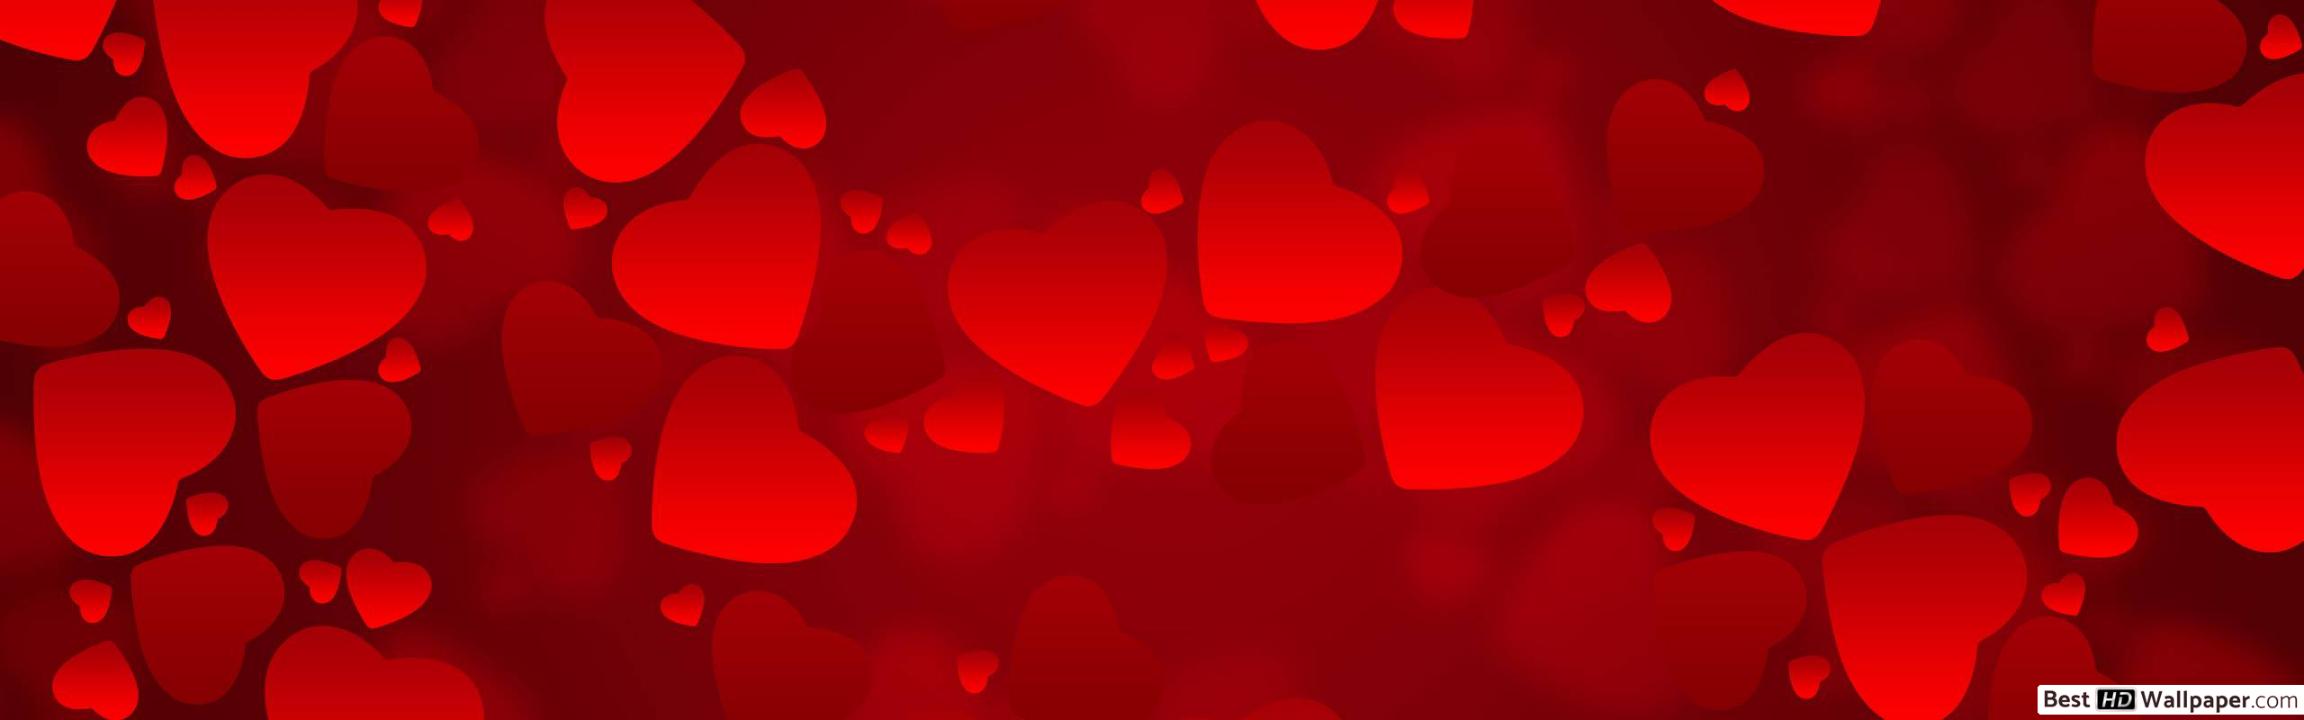 Red Heart Texture Background - HD Wallpaper 